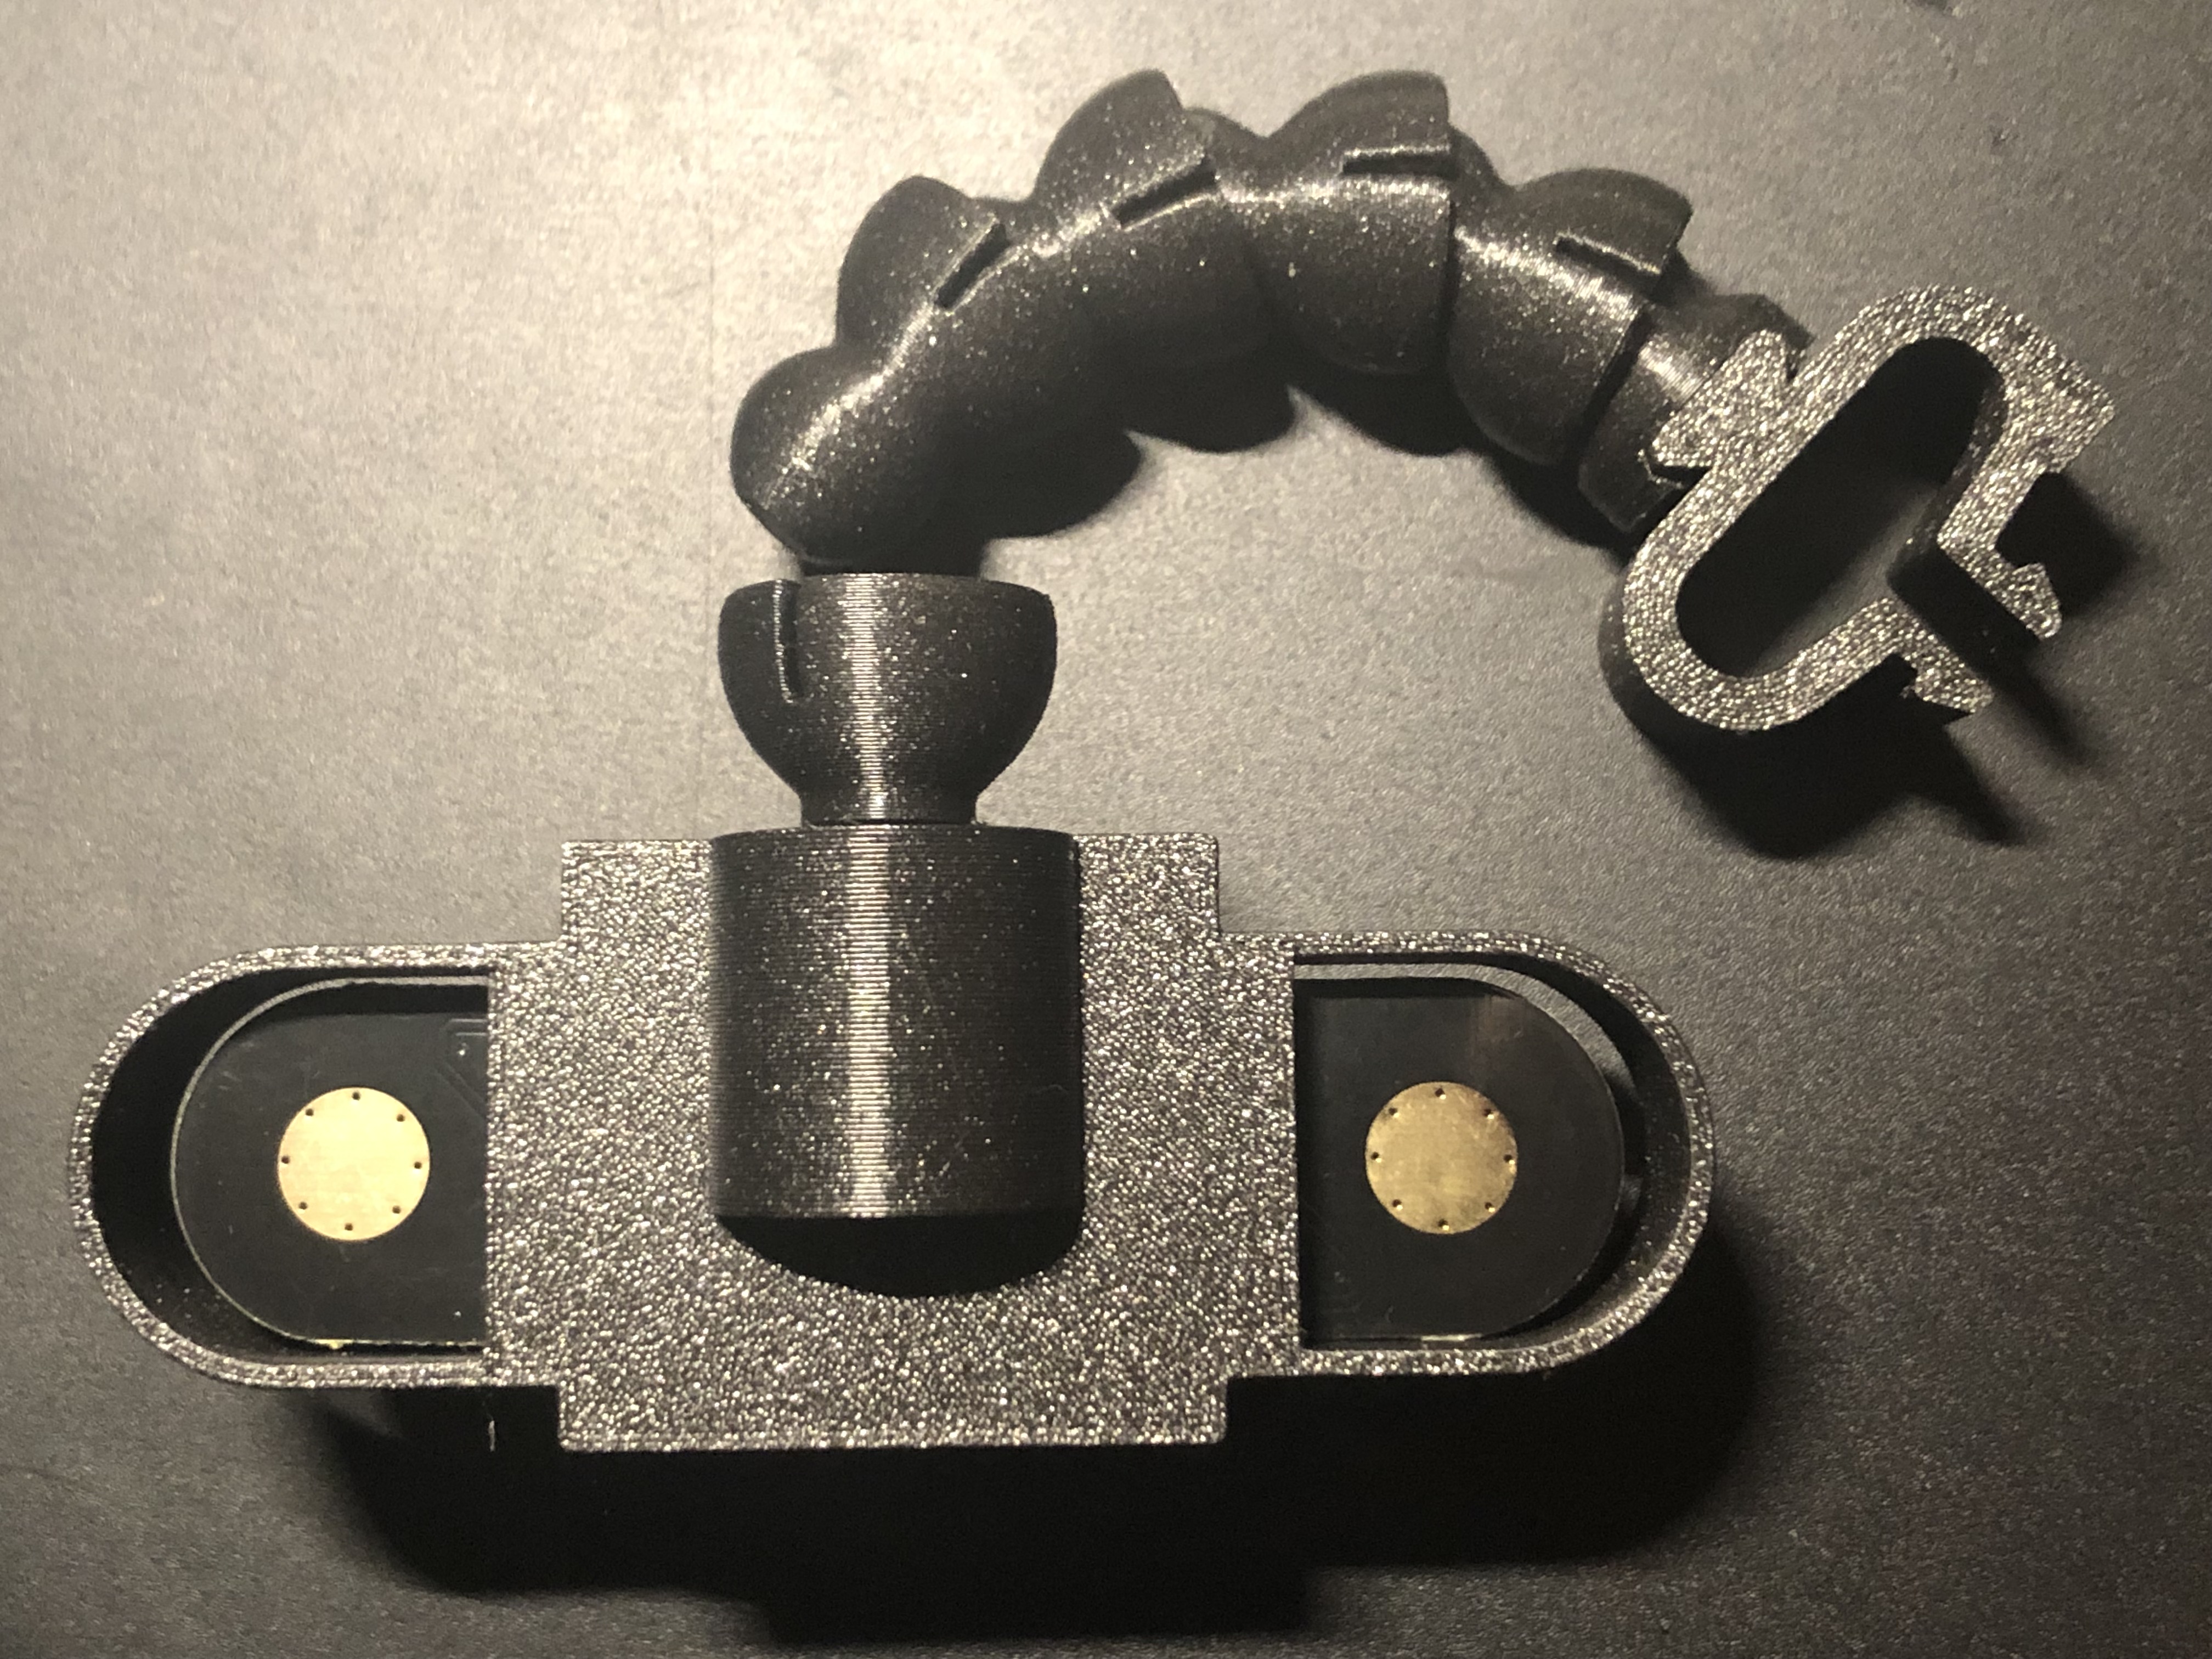 Universal adaptor for "Flexi-Arm Camera Mount"